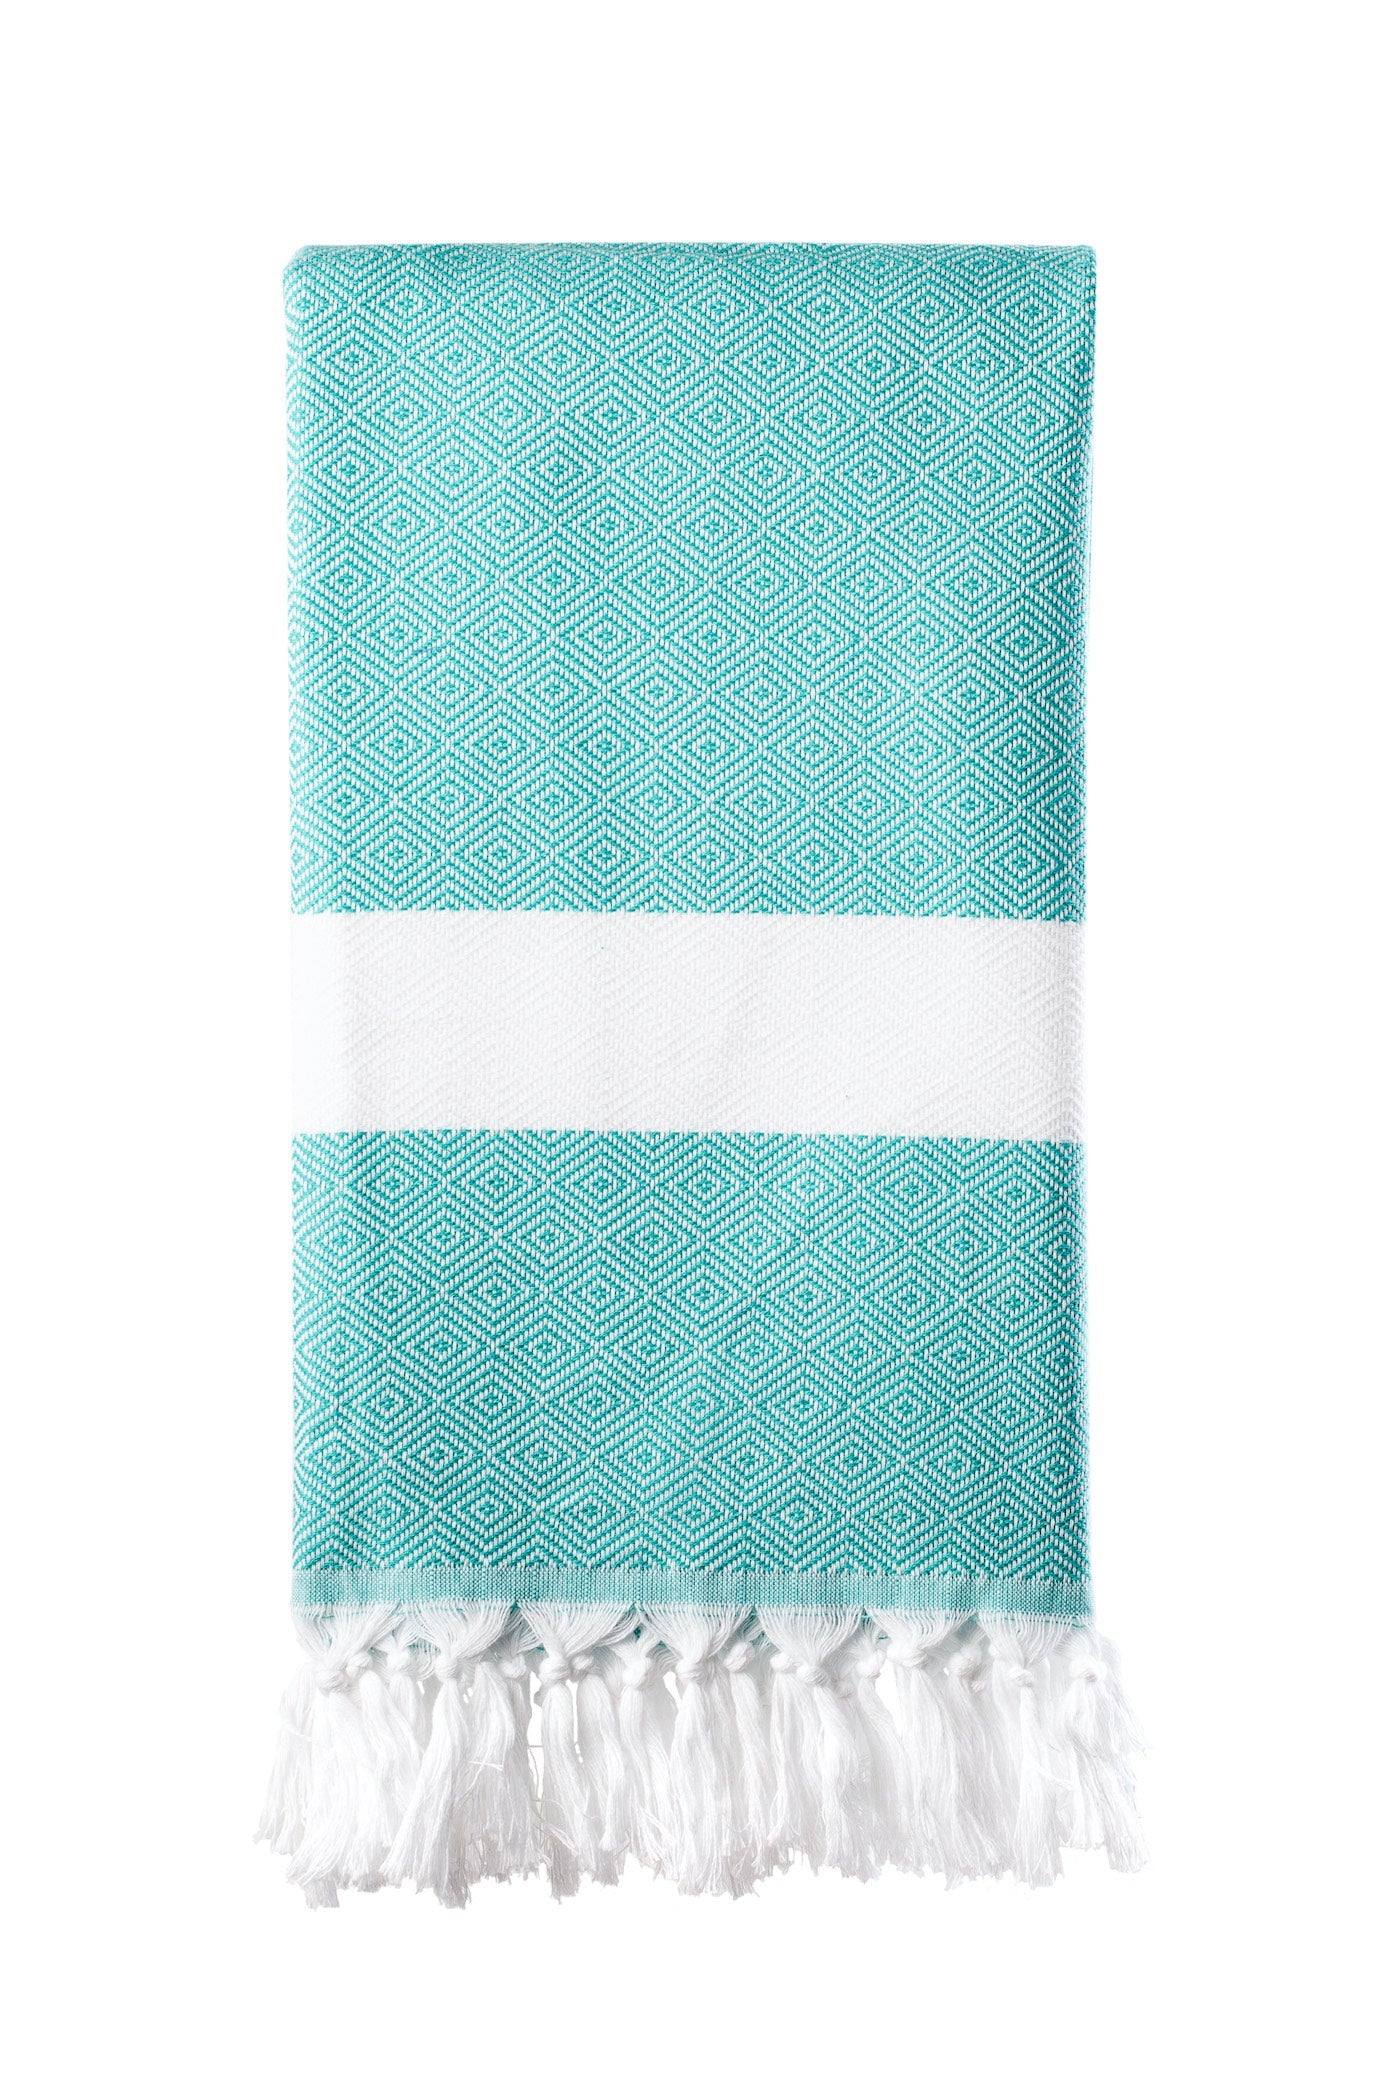 Dimanta Sea Green Turkish Towel